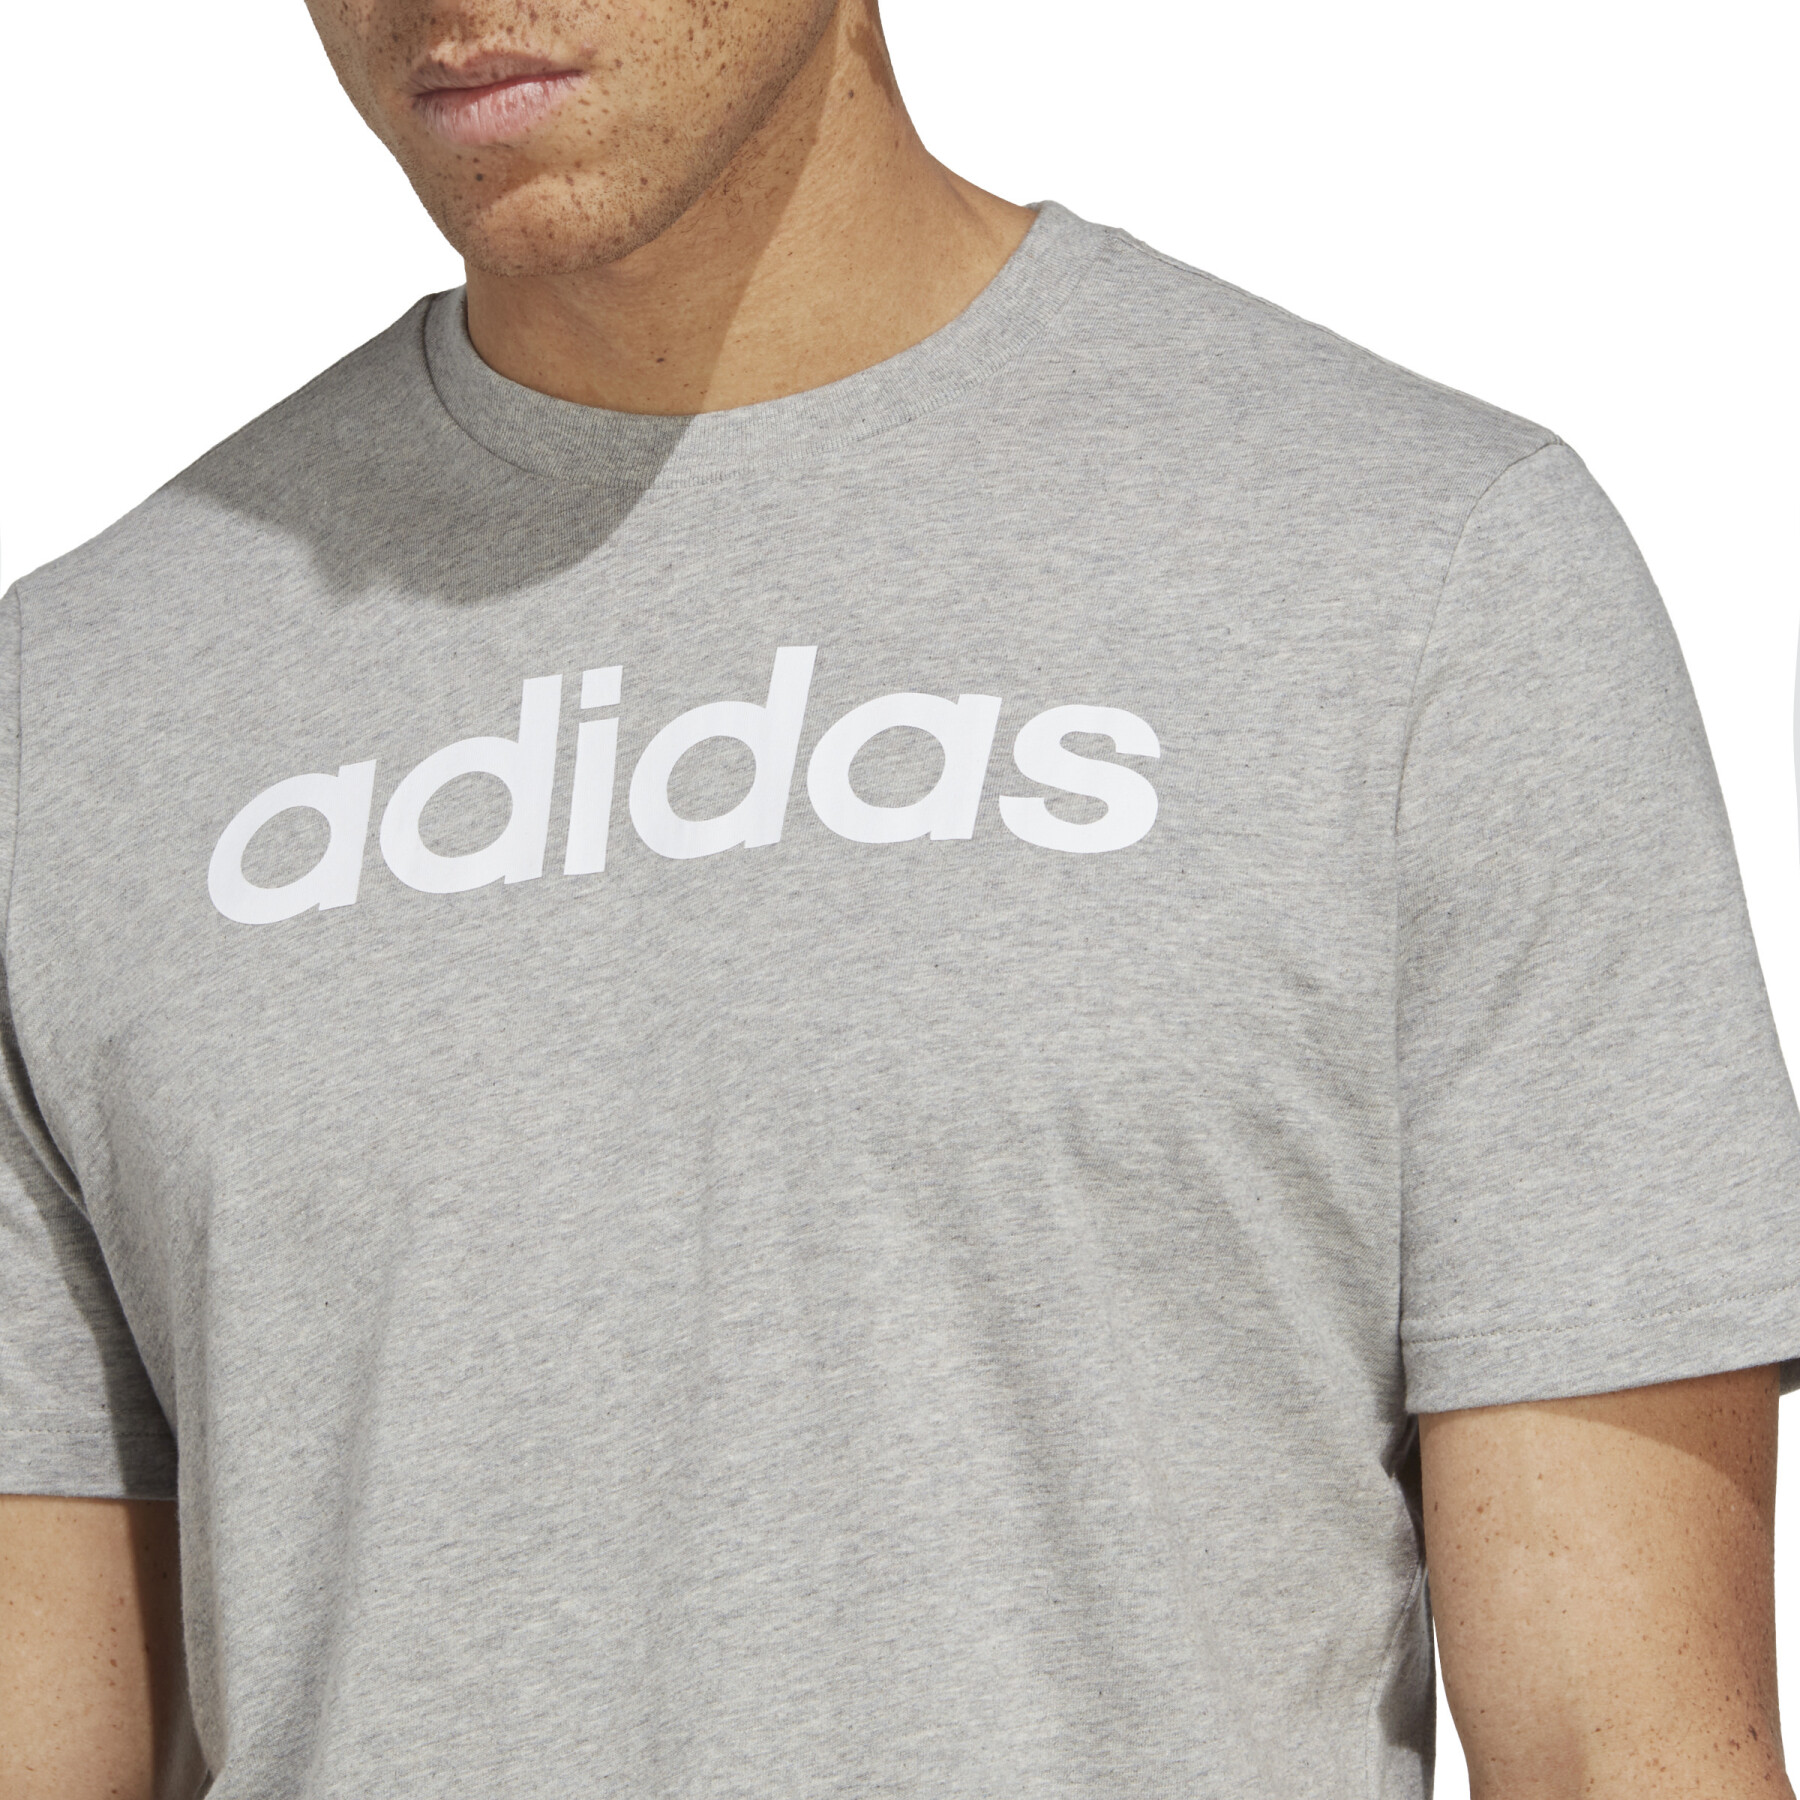 Lineair geborduurd logo t-shirt single jersey adidas Essentials